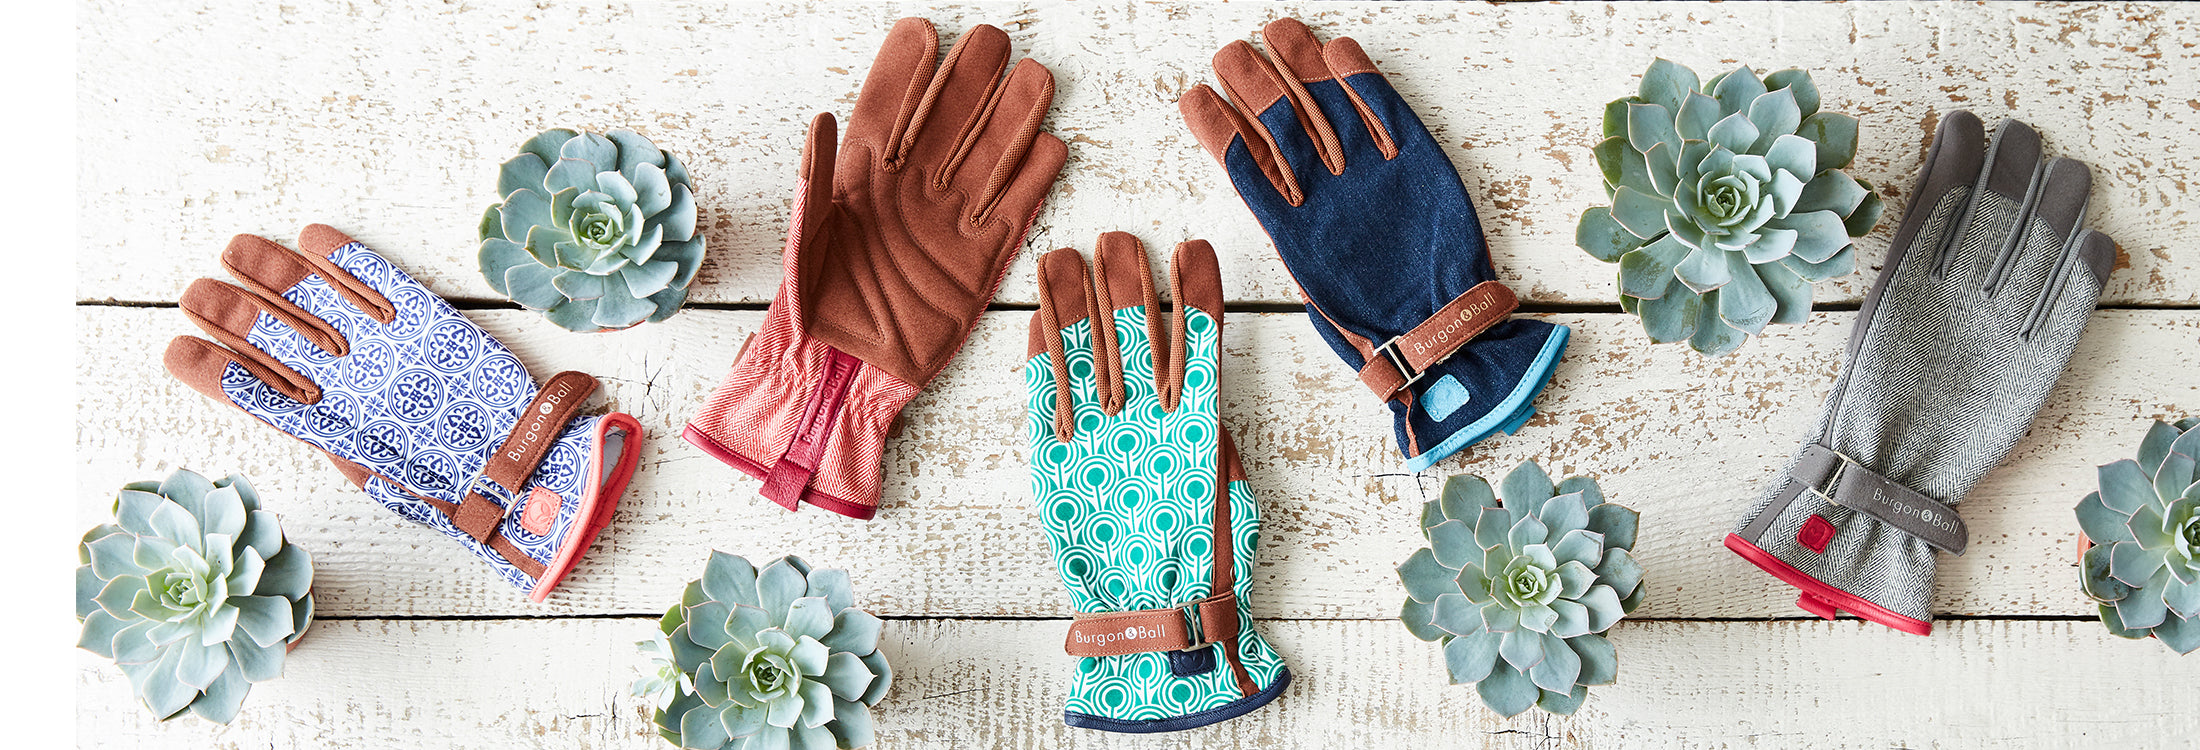 Trade Women's Gardening Gloves